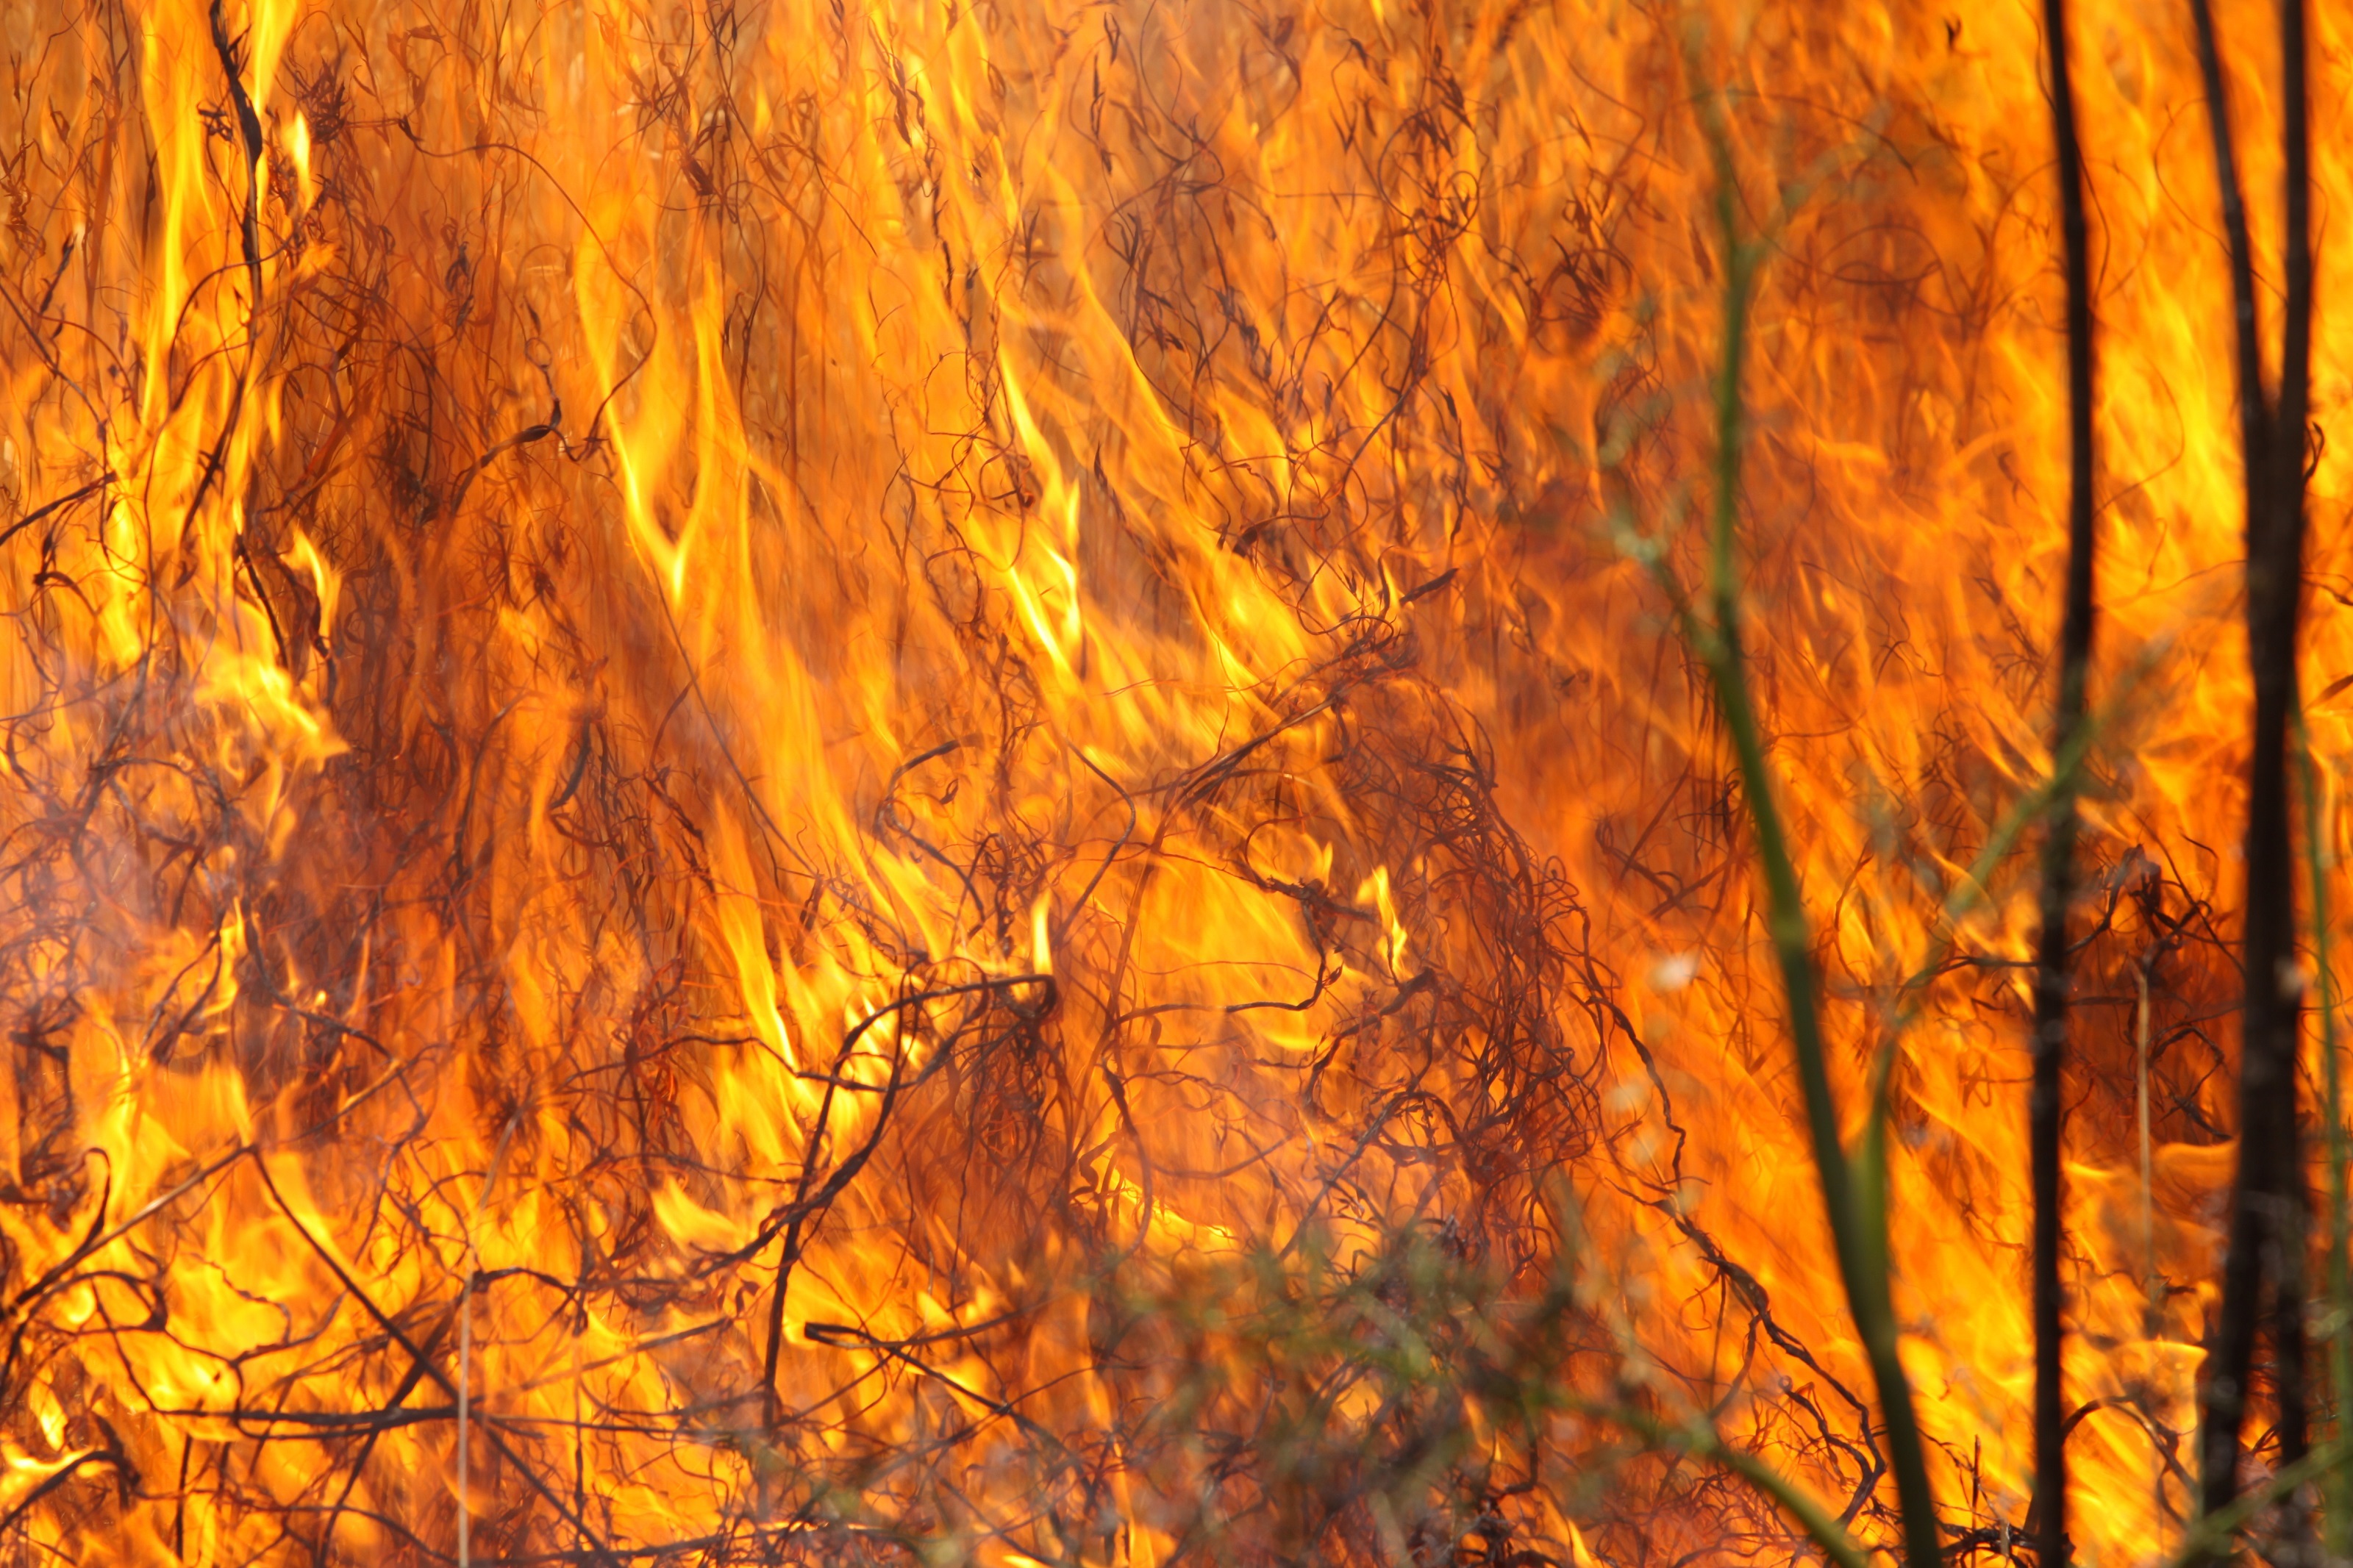 Burning Grass, Burning, Fire, Forest, Grass, HQ Photo